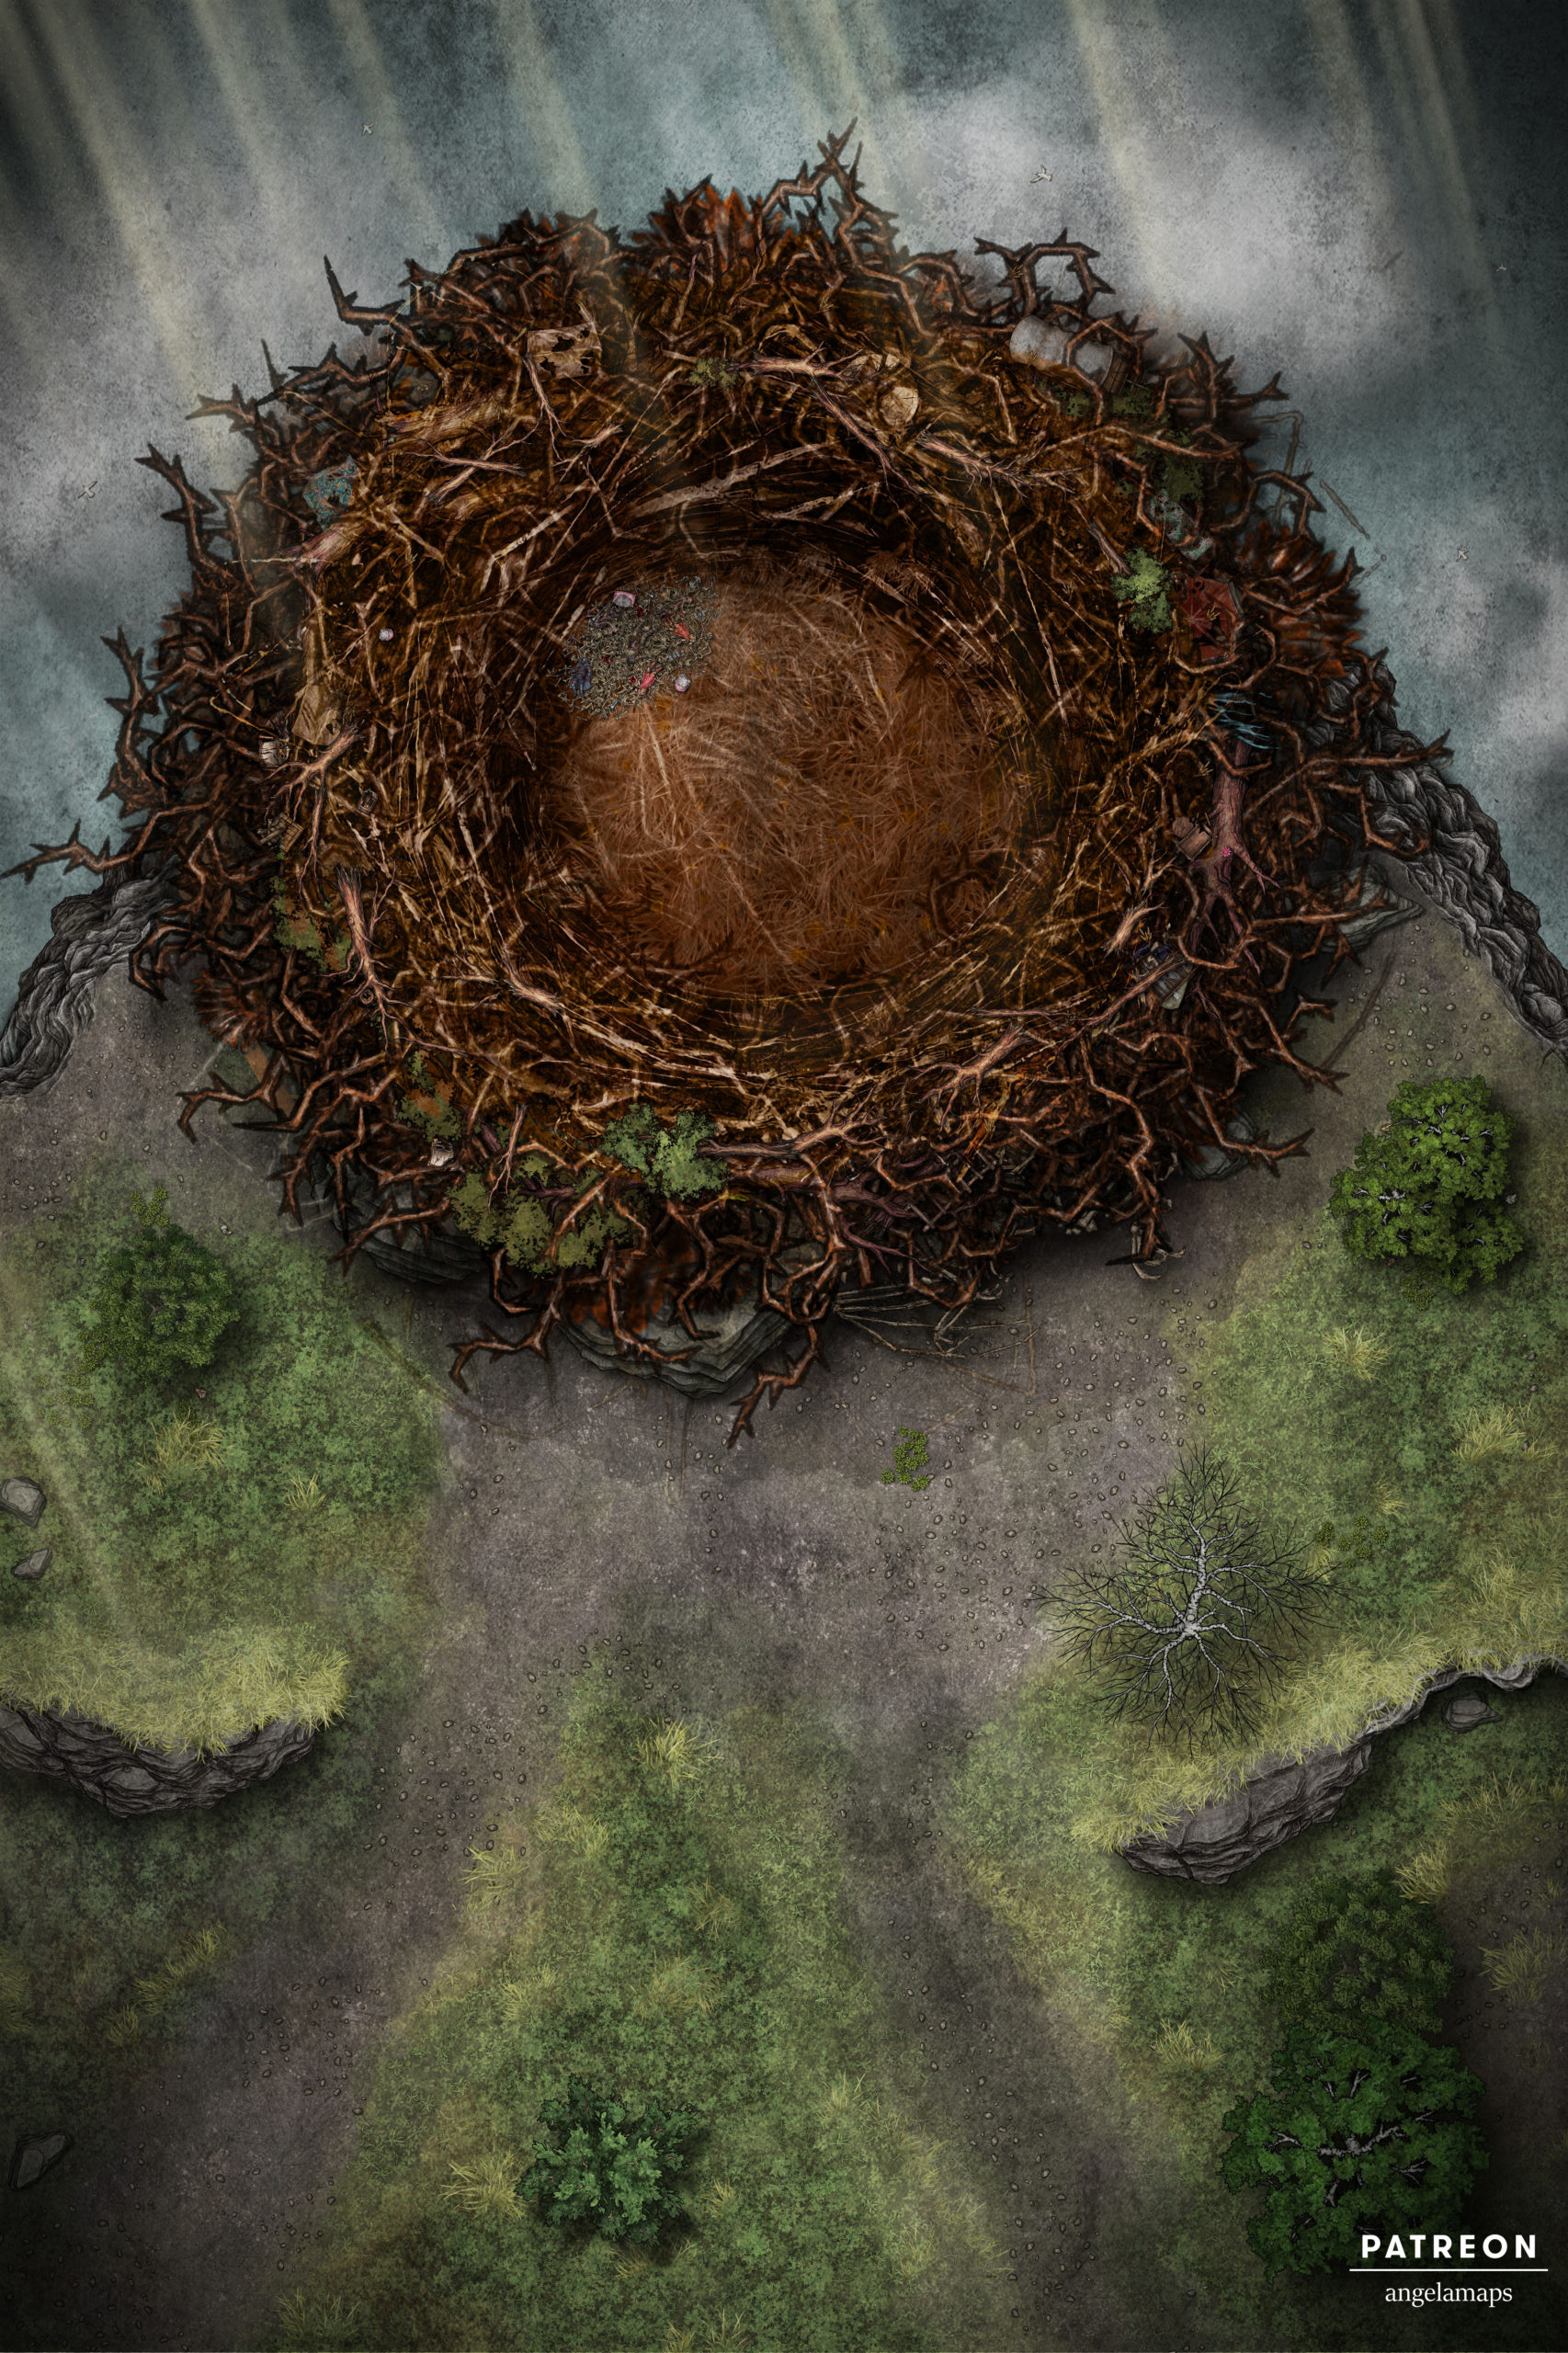 Giant empty nest battle map with debris for TTRPGs